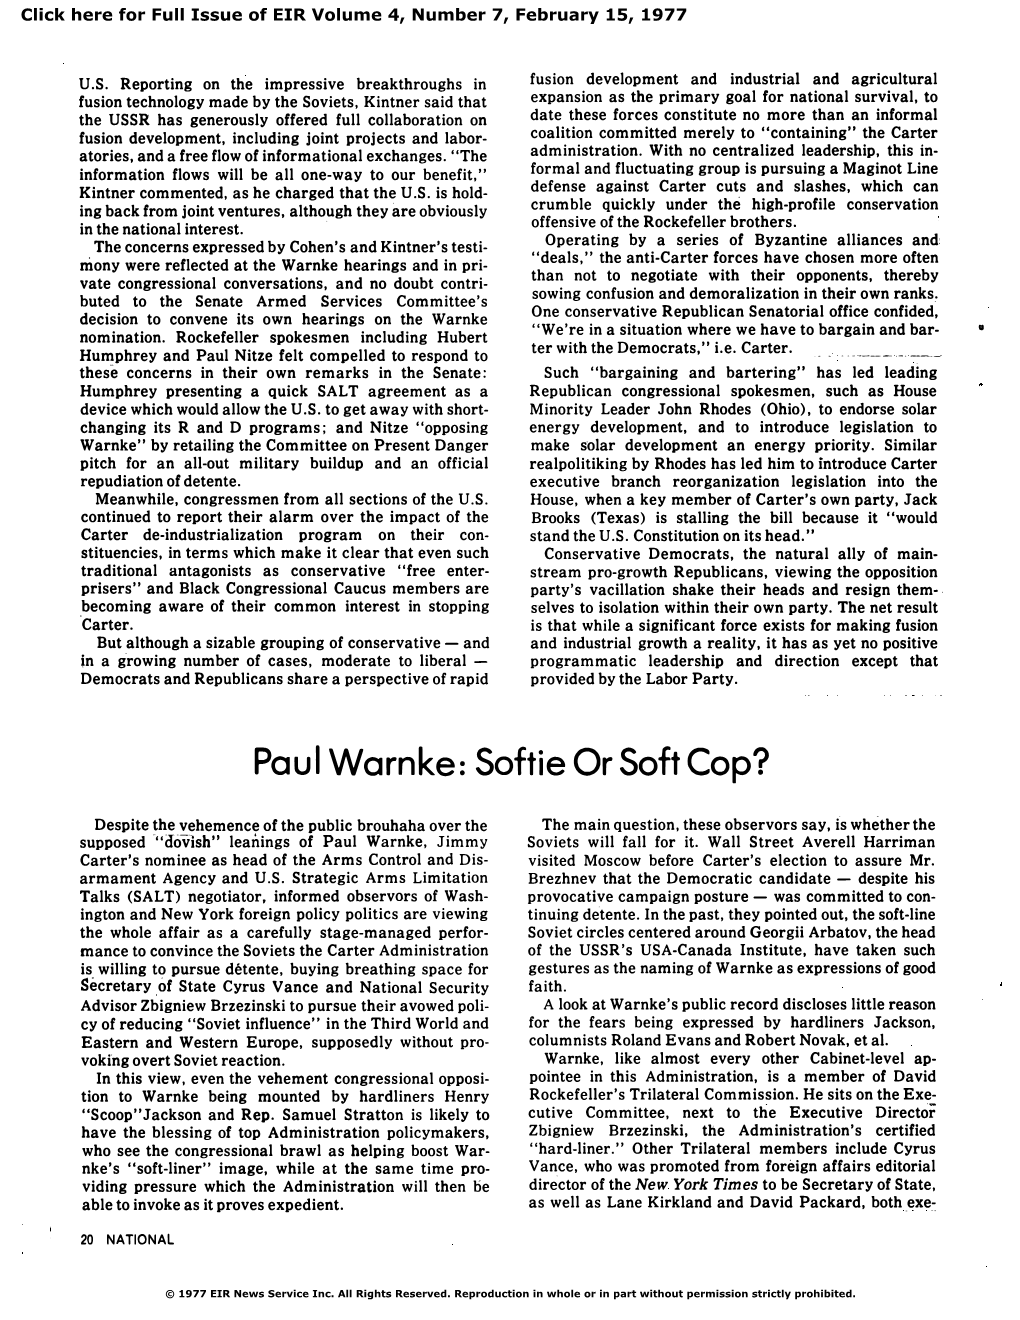 Paul Warnke: Softie Or Soft Cop?